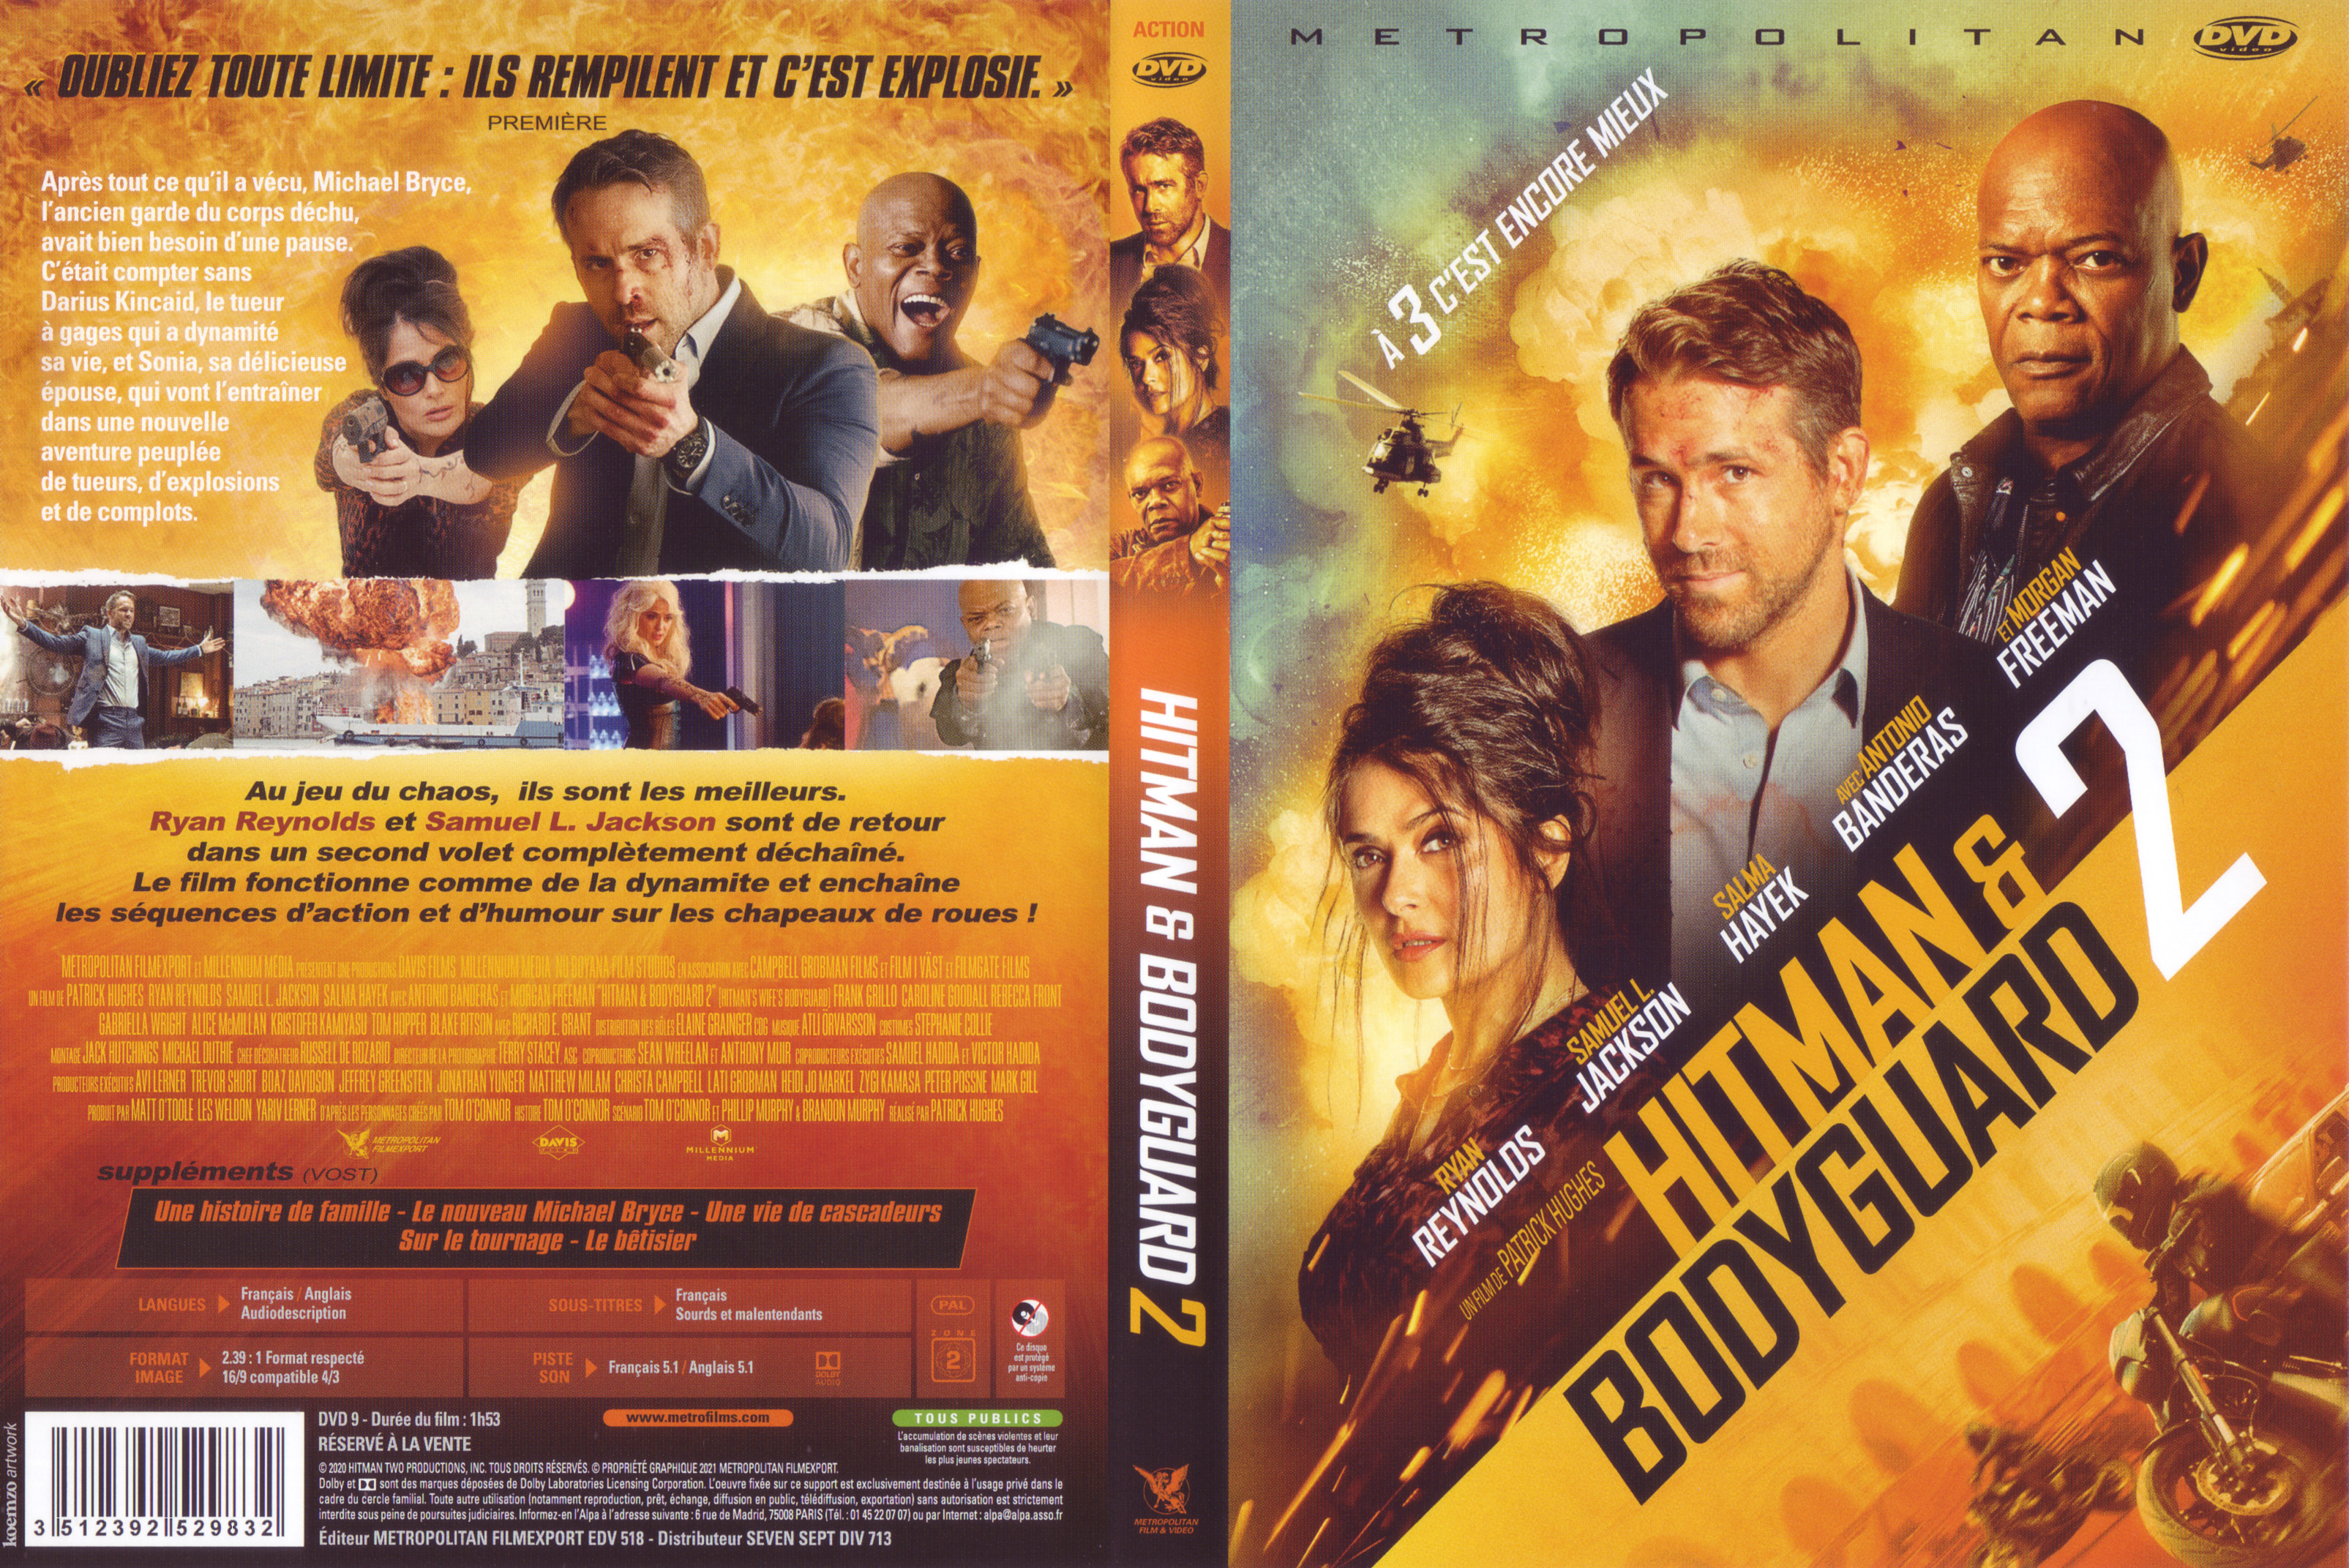 Jaquette DVD Hitman & bodyguard 2